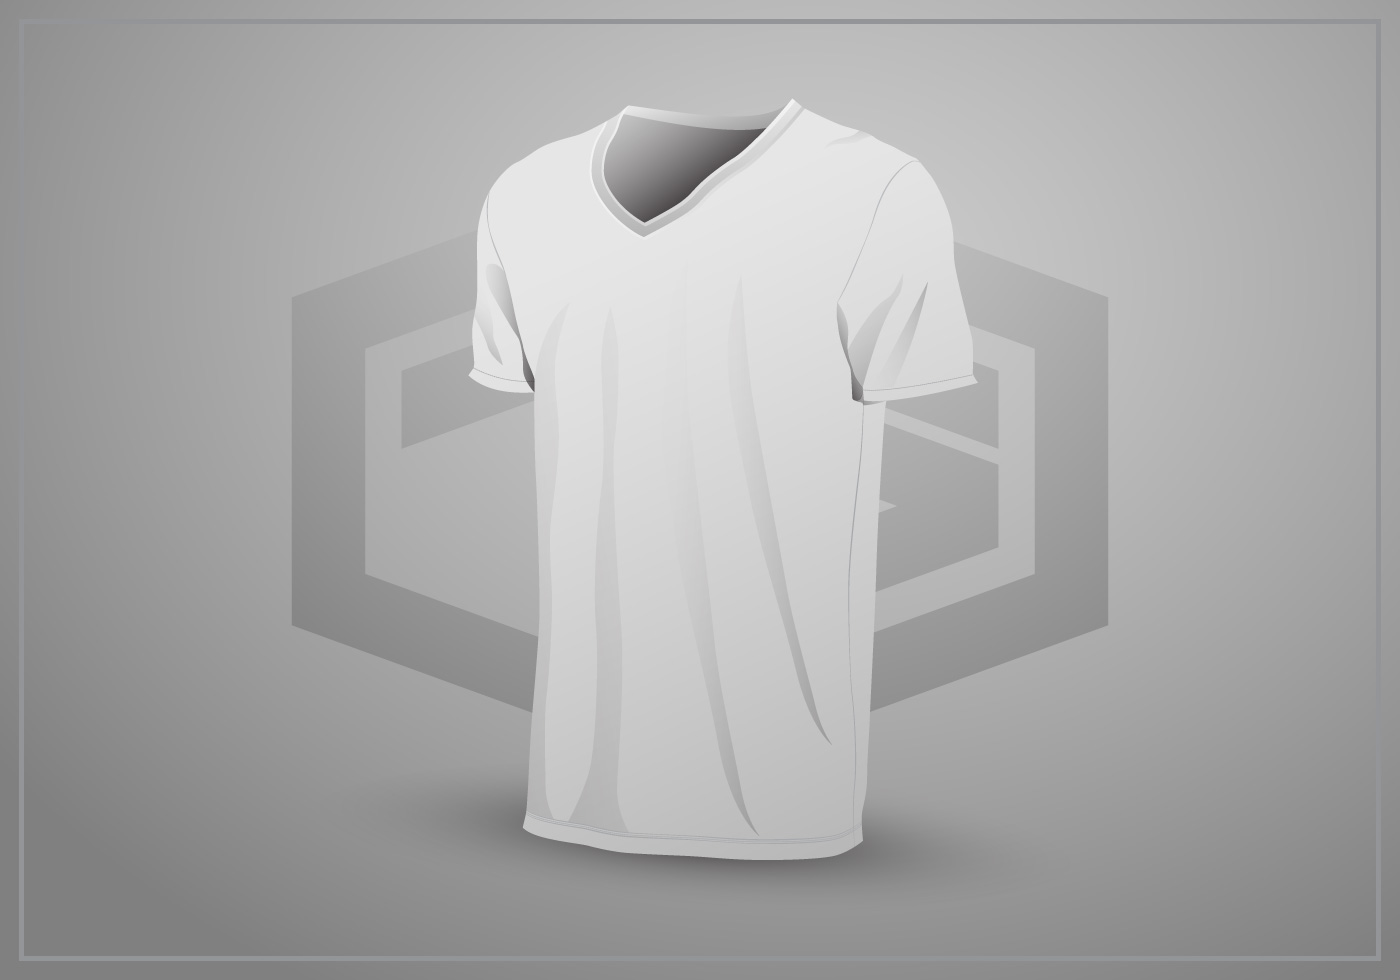 Download Realistic T-Shirt Mock Up Template - Download Free Vectors ...